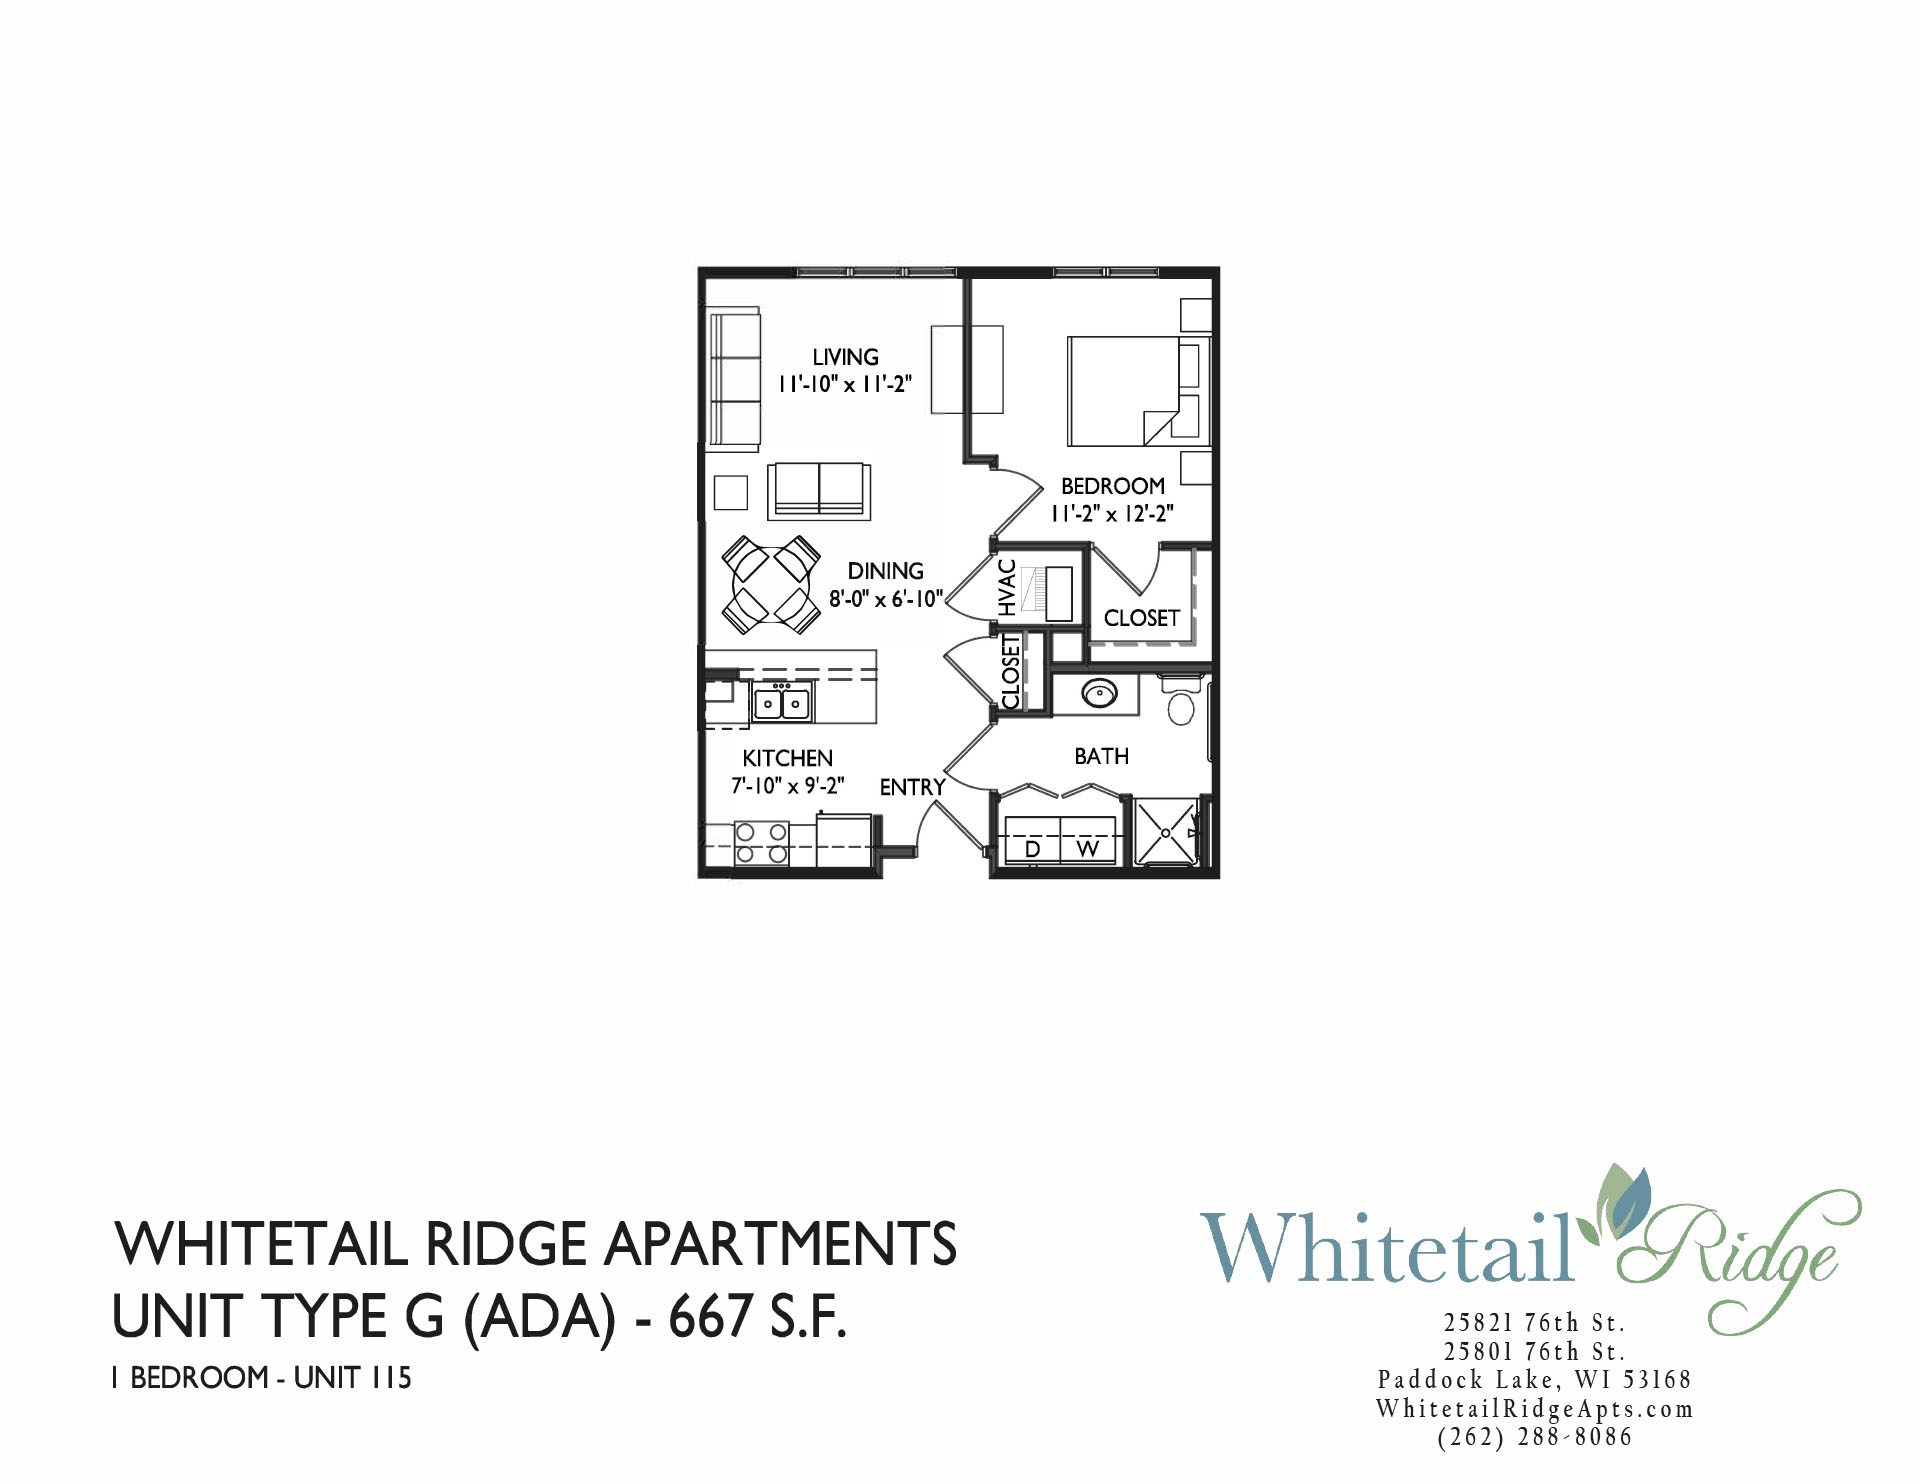 senior apartment layout, senior apartment floorplan, senior apartments